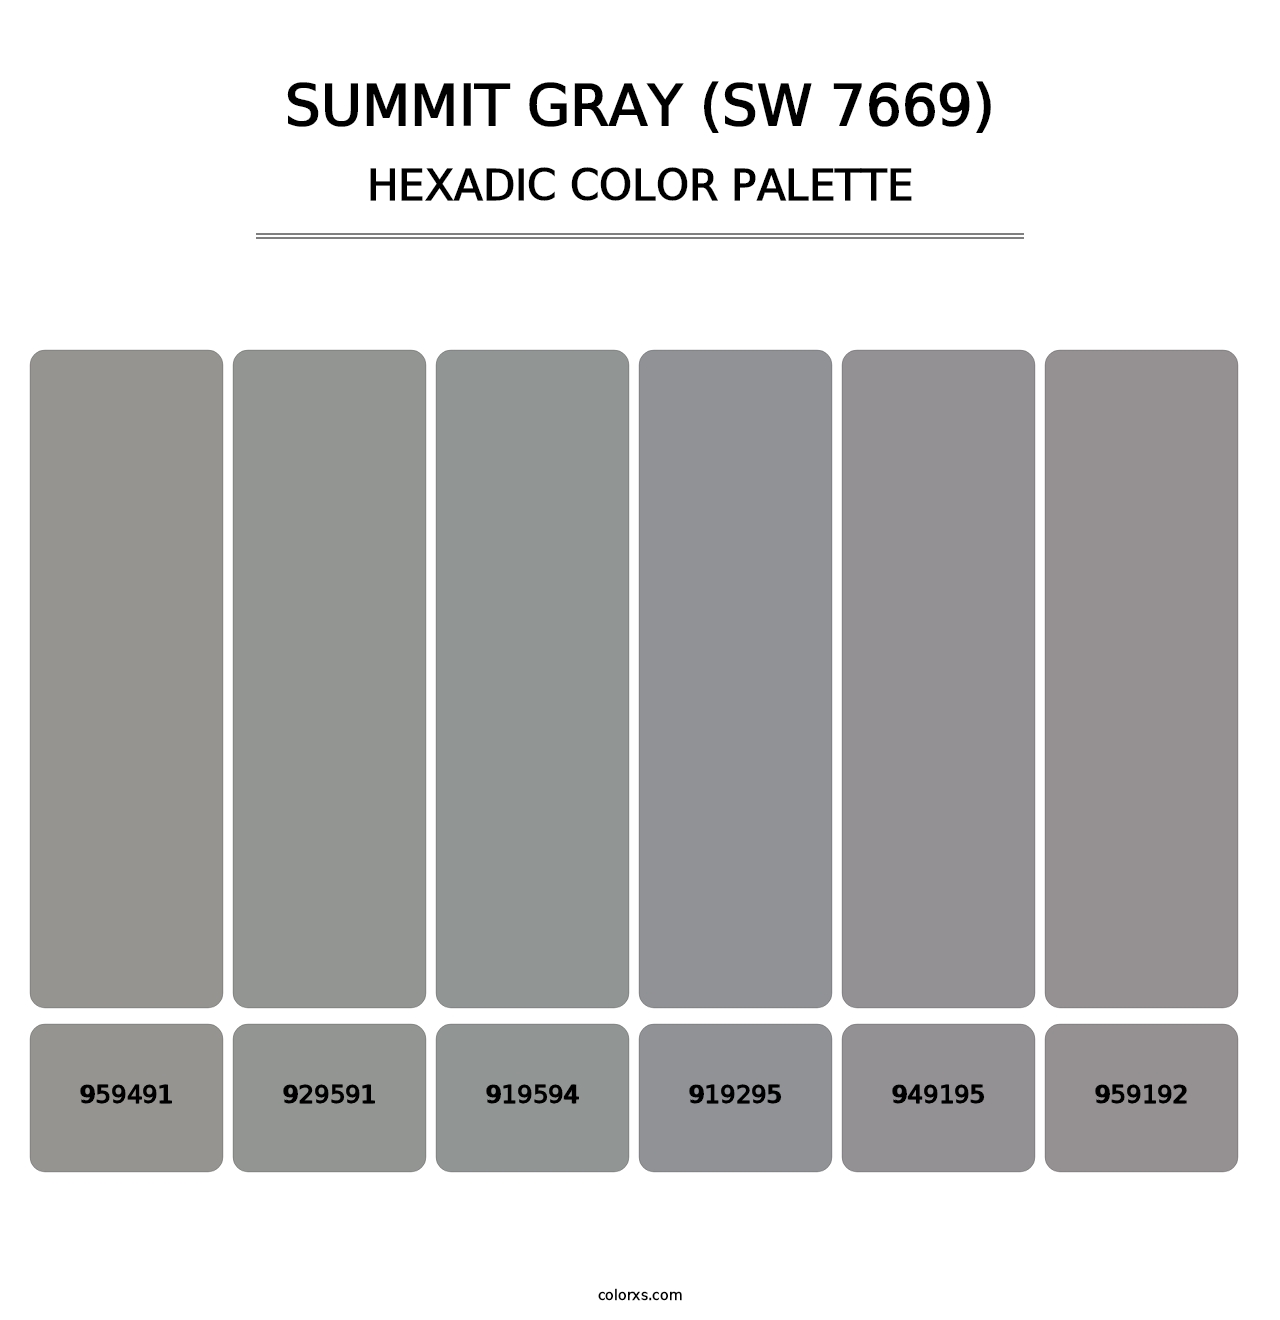 Summit Gray (SW 7669) - Hexadic Color Palette